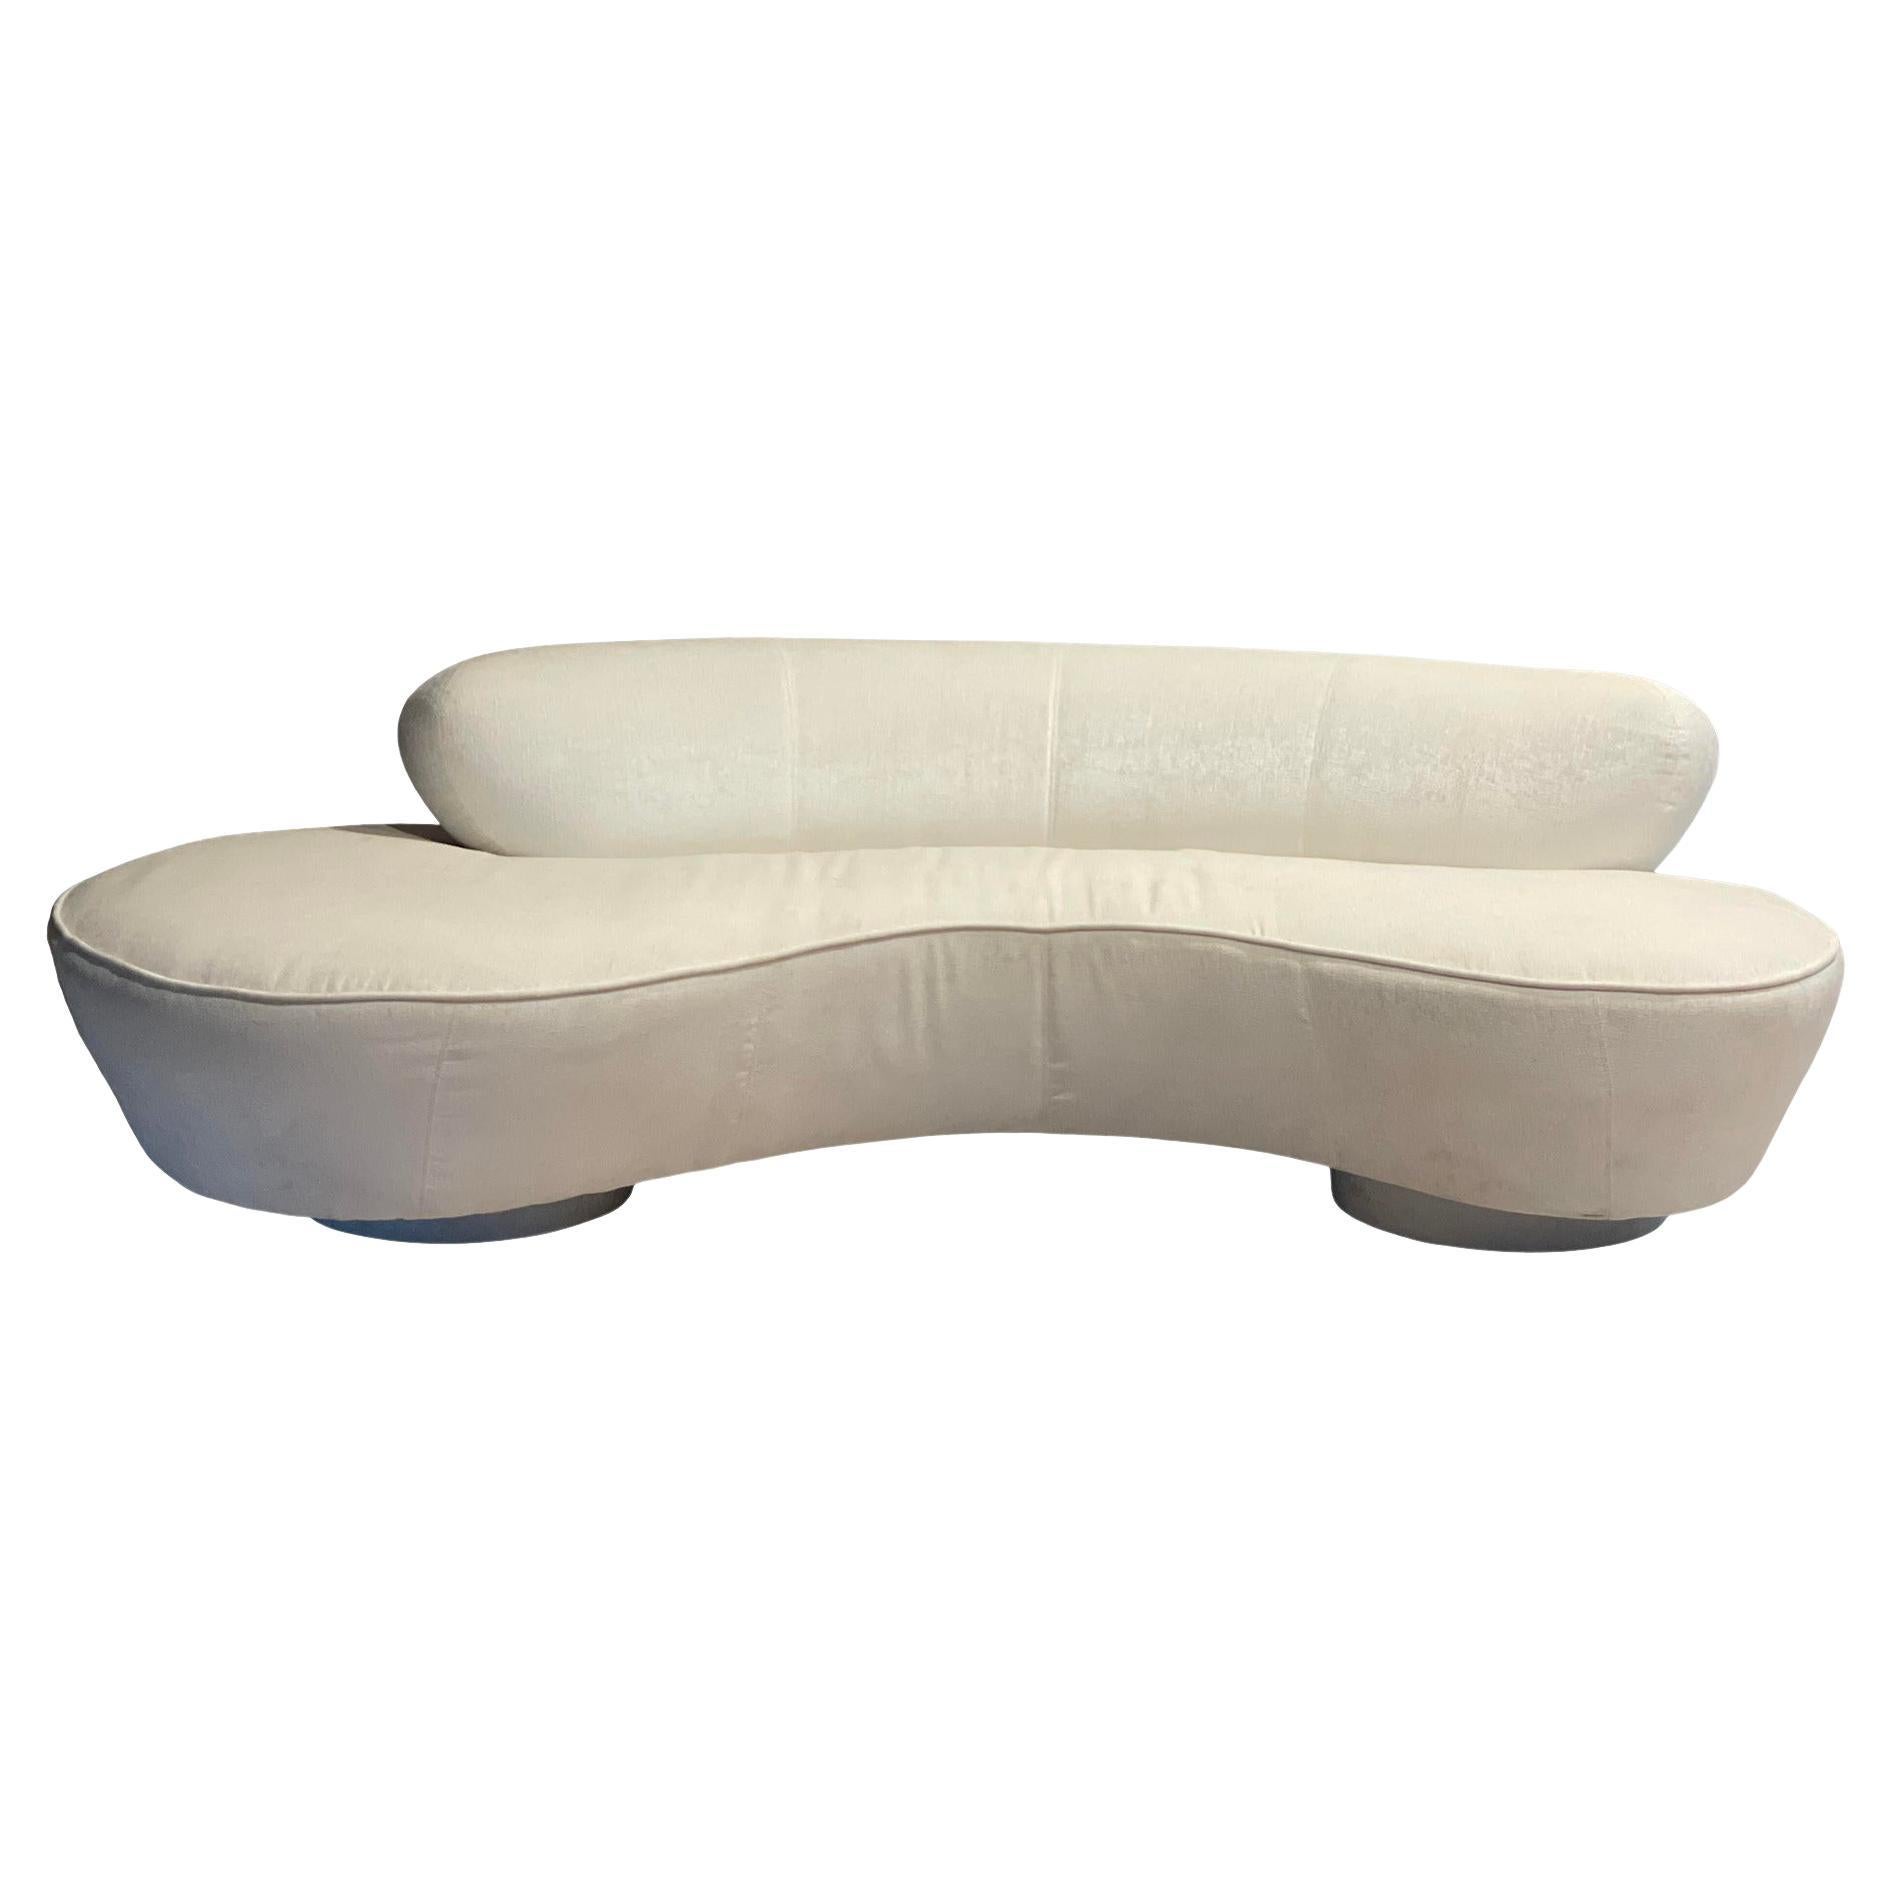 Vladimir Kagan Directional Cloud Serpentine Sofa in Upholstery